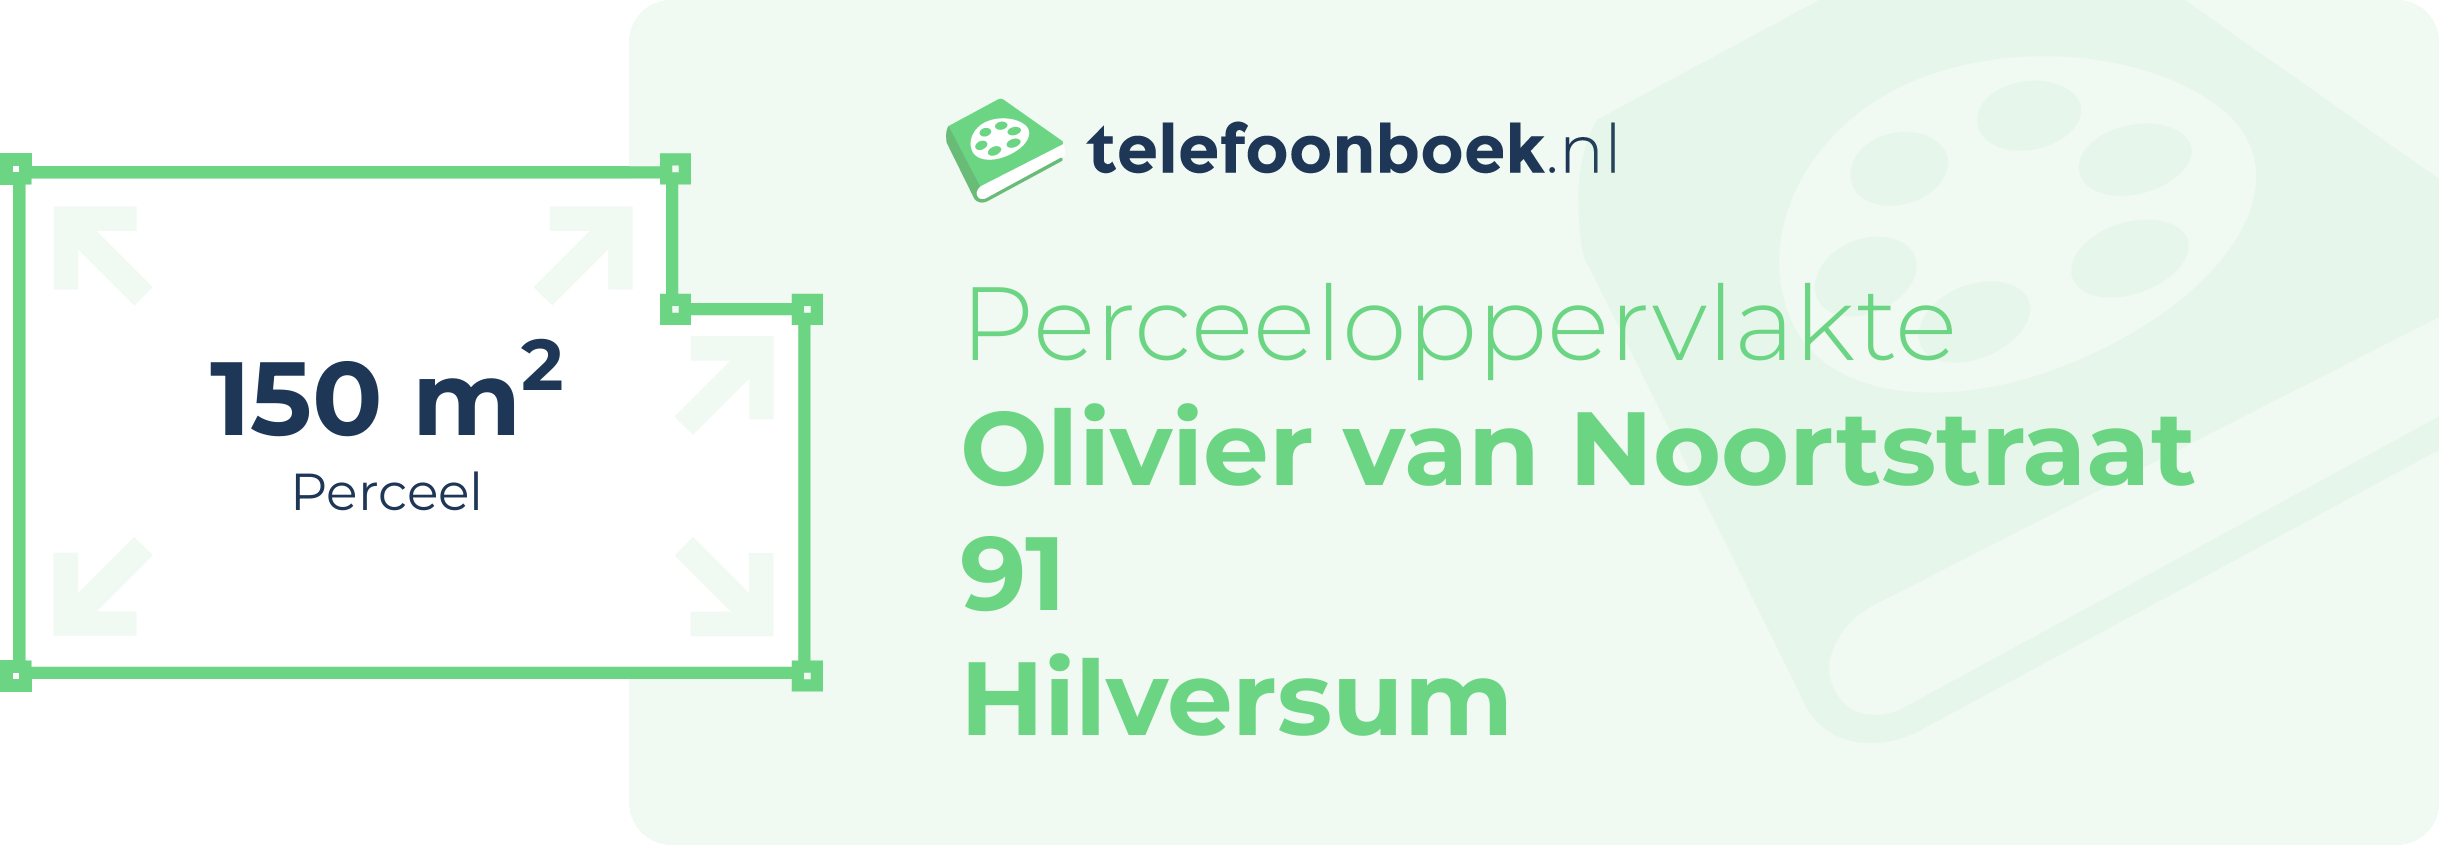 Perceeloppervlakte Olivier Van Noortstraat 91 Hilversum